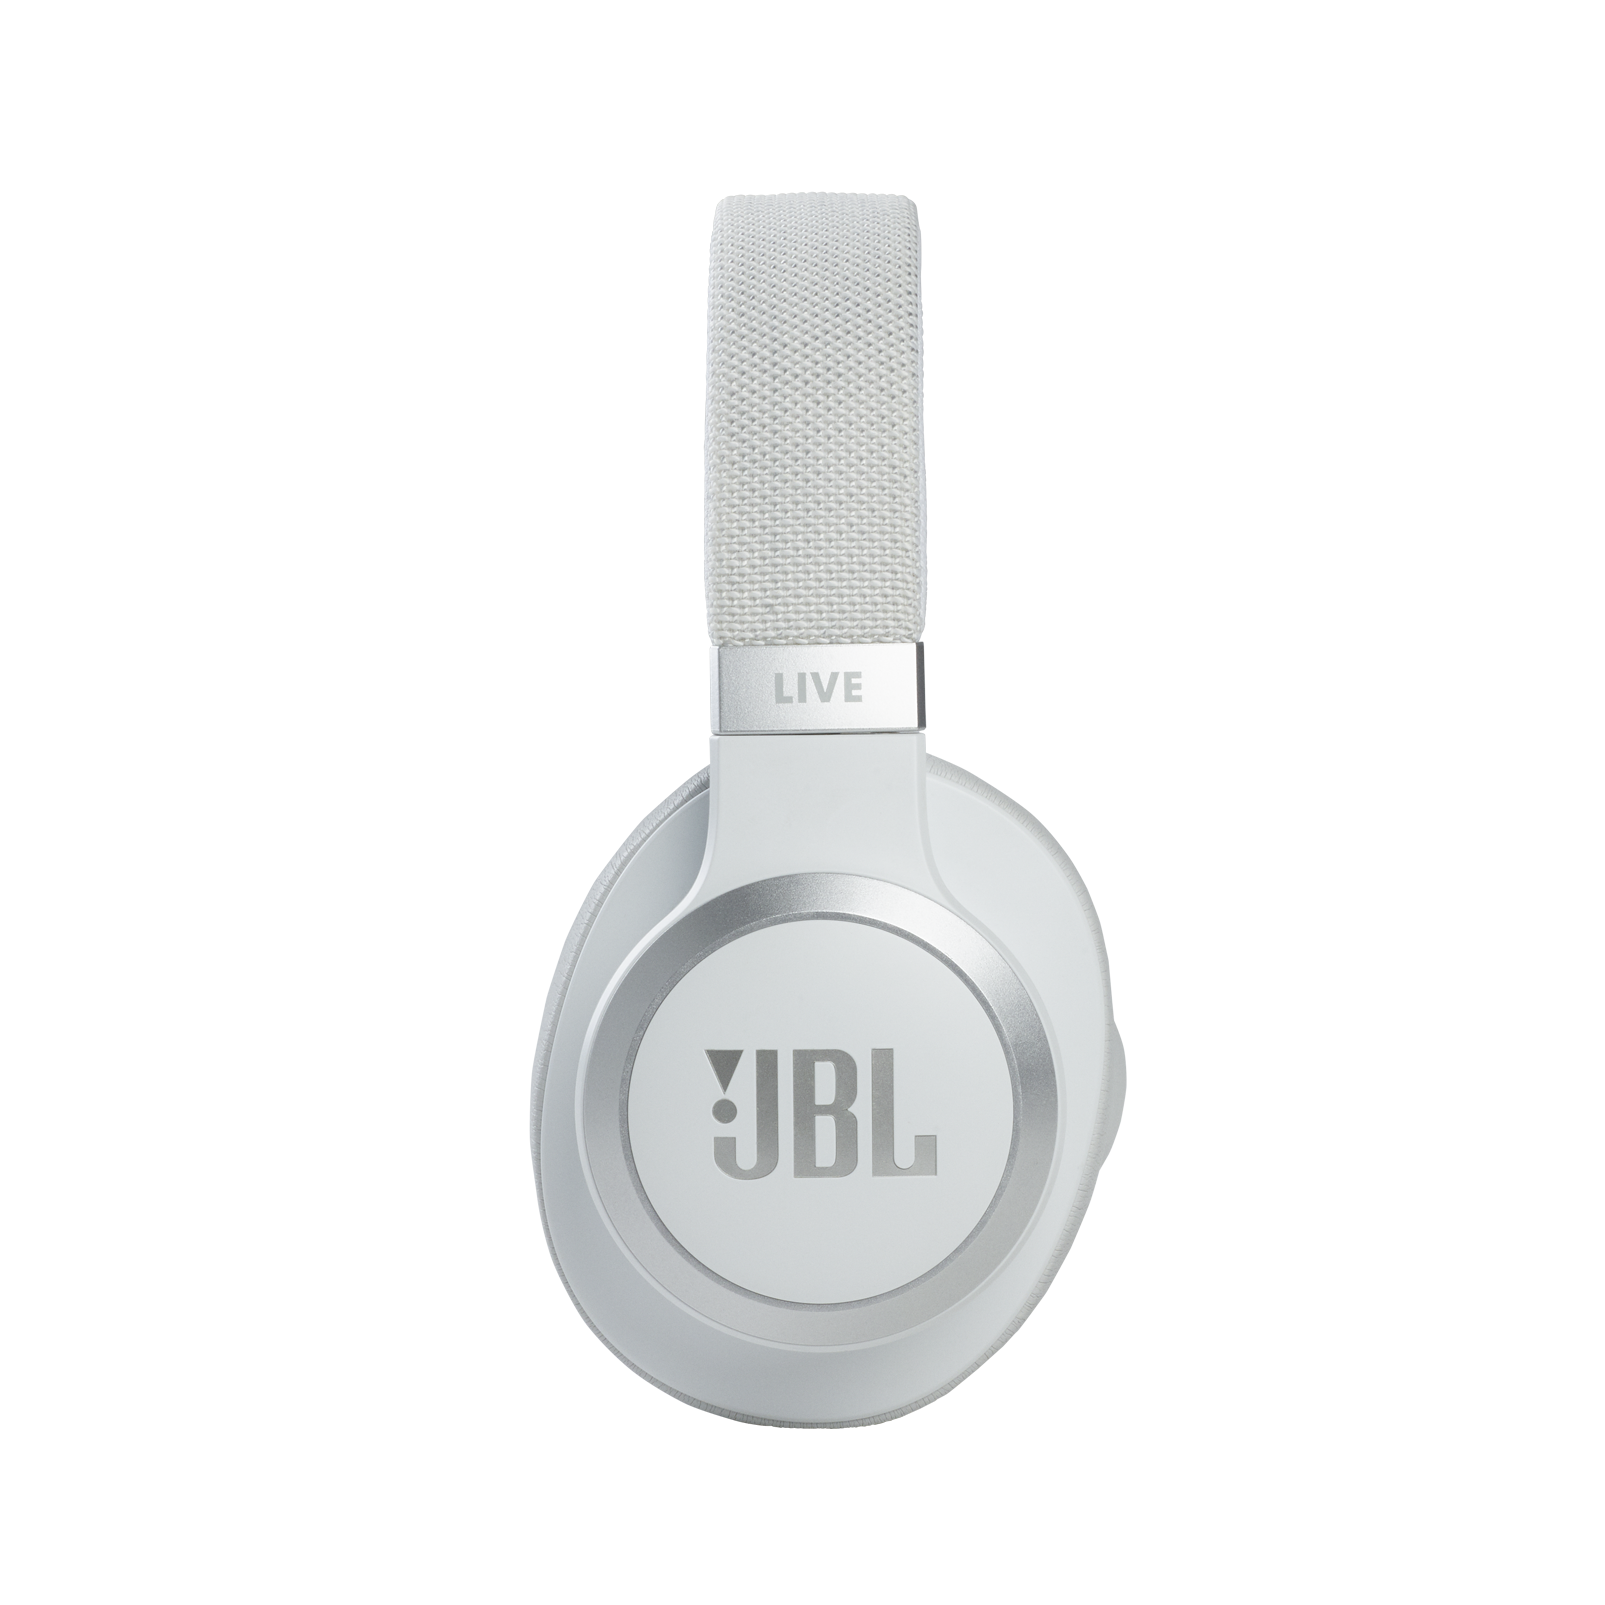 JBL Live 660NC - White - Wireless over-ear NC headphones - Detailshot 1